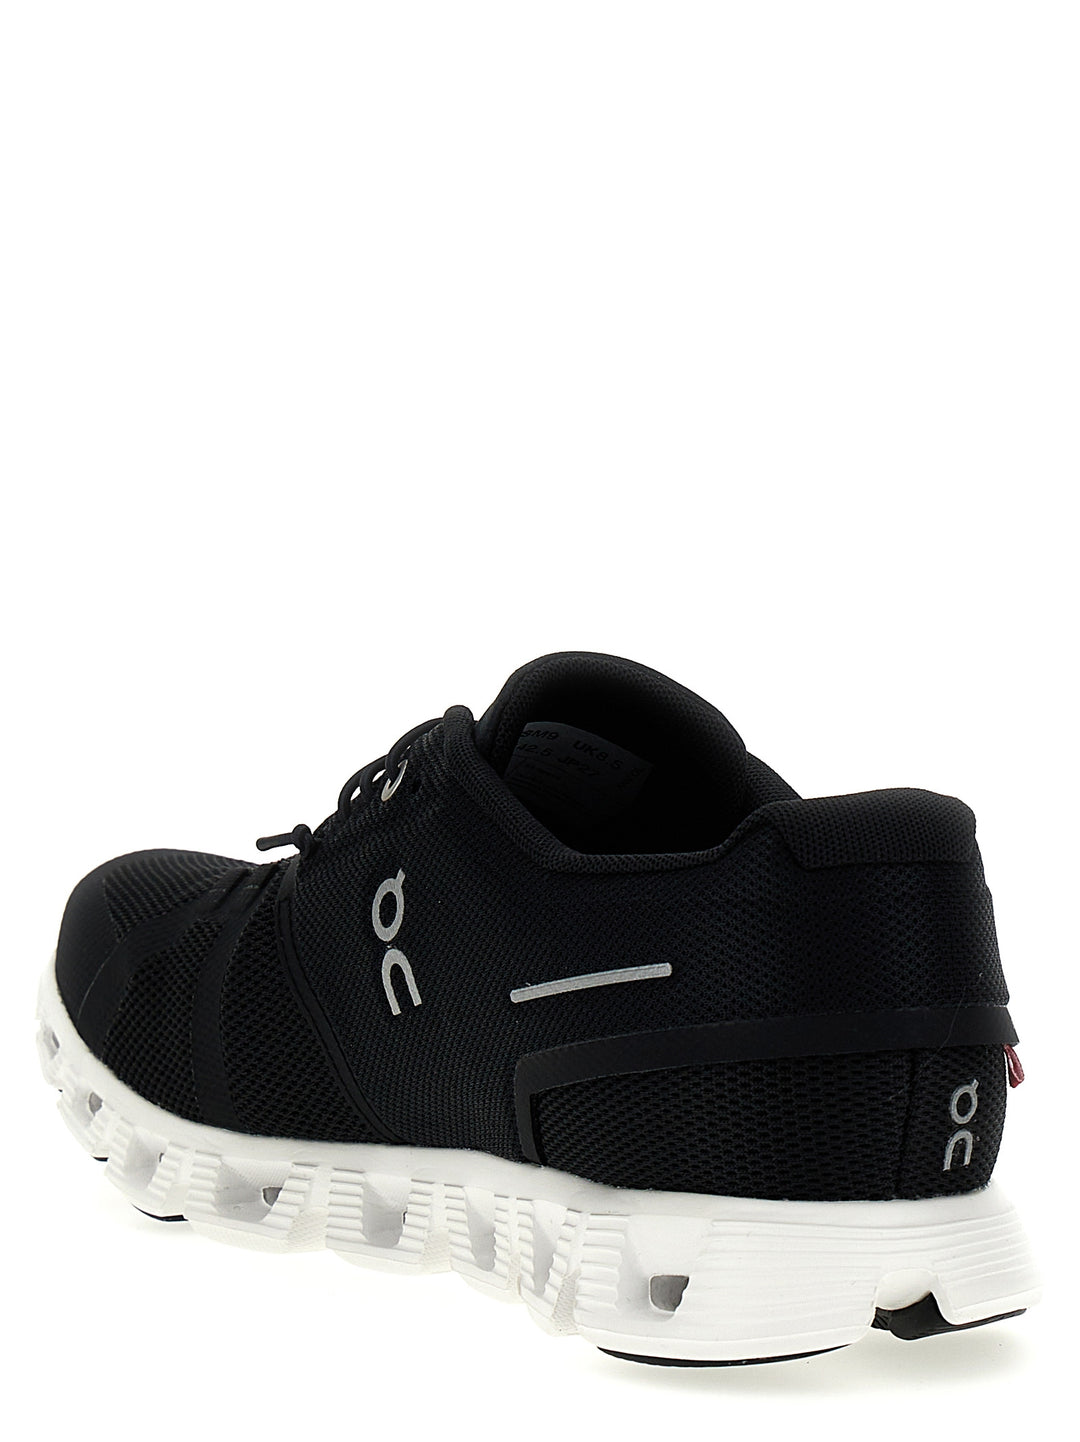 Cloud 5 Sneakers Bianco/Nero